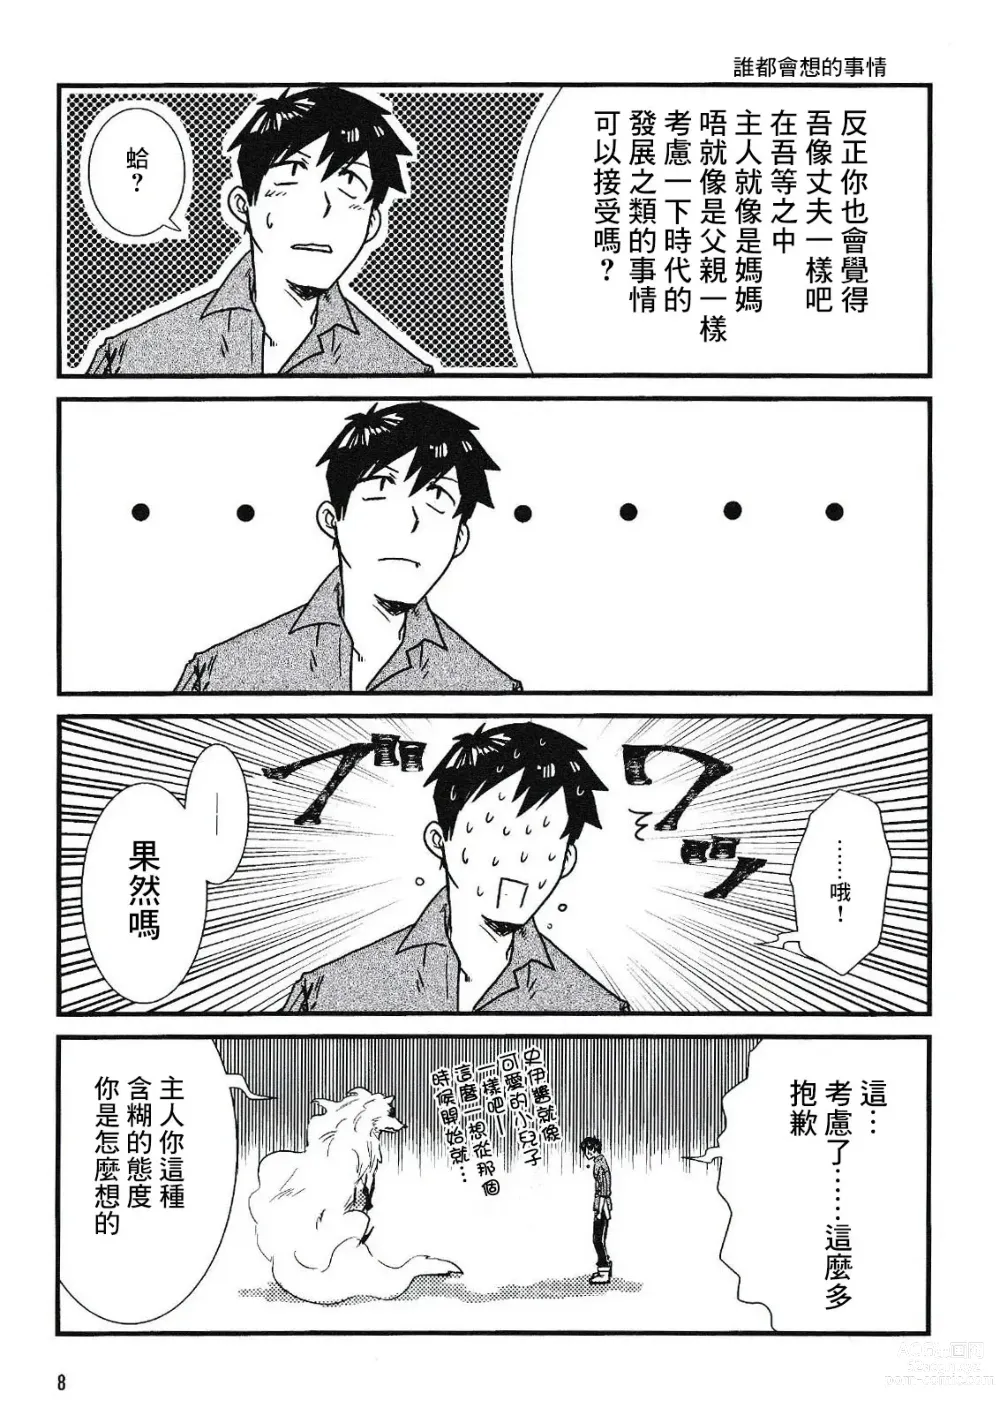 Page 8 of doujinshi NO WONDER!